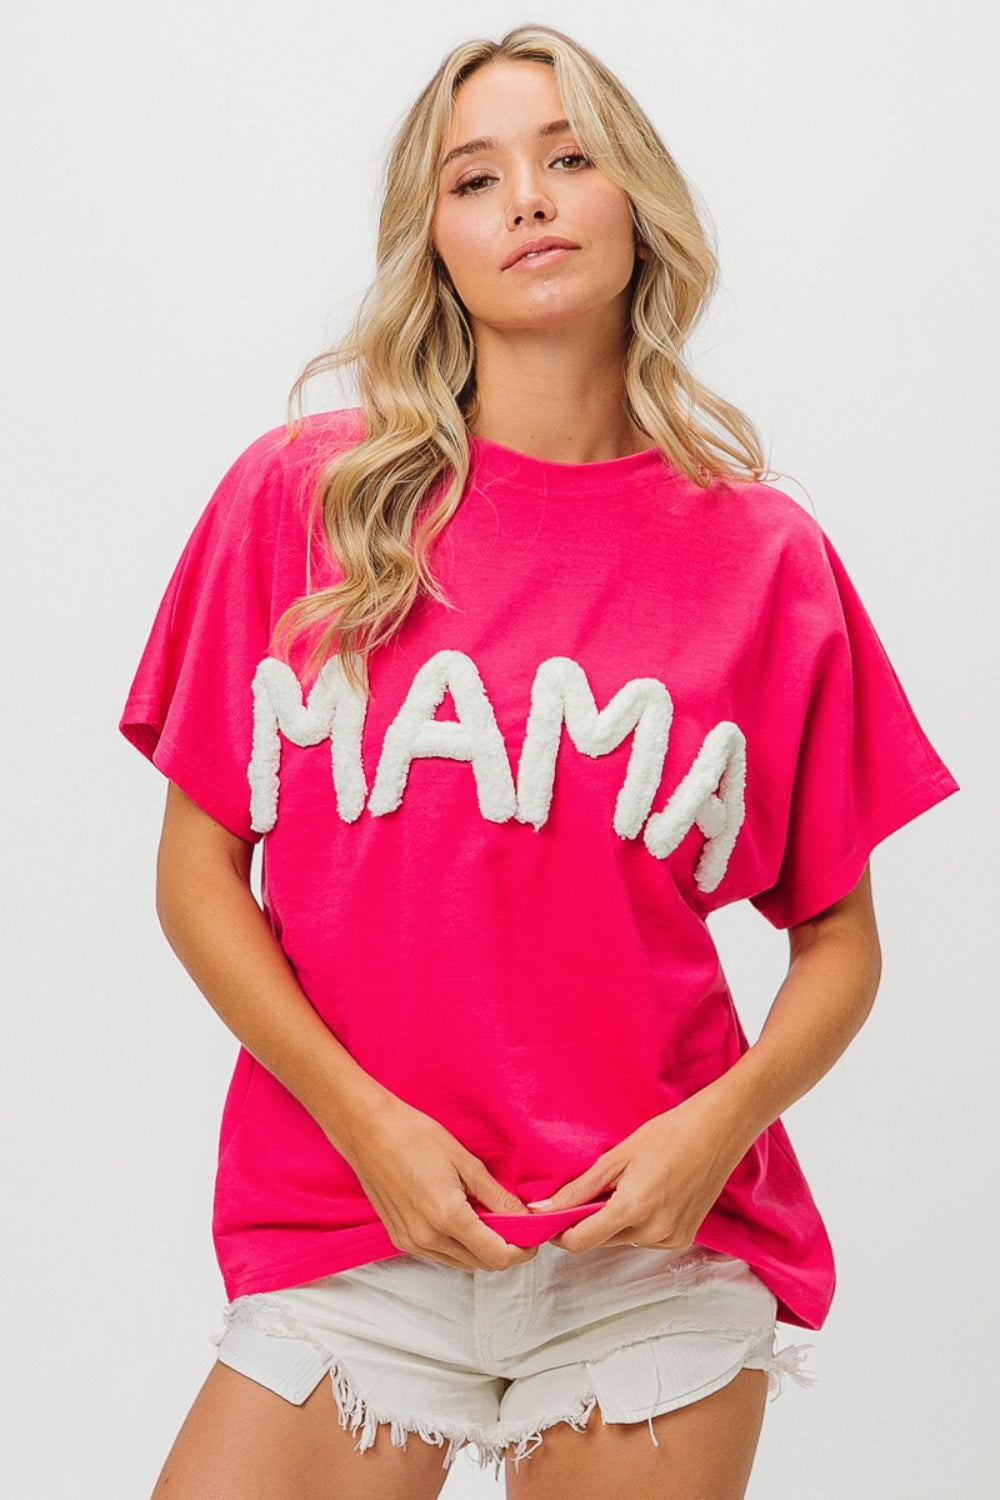 Mama Letter Shirt